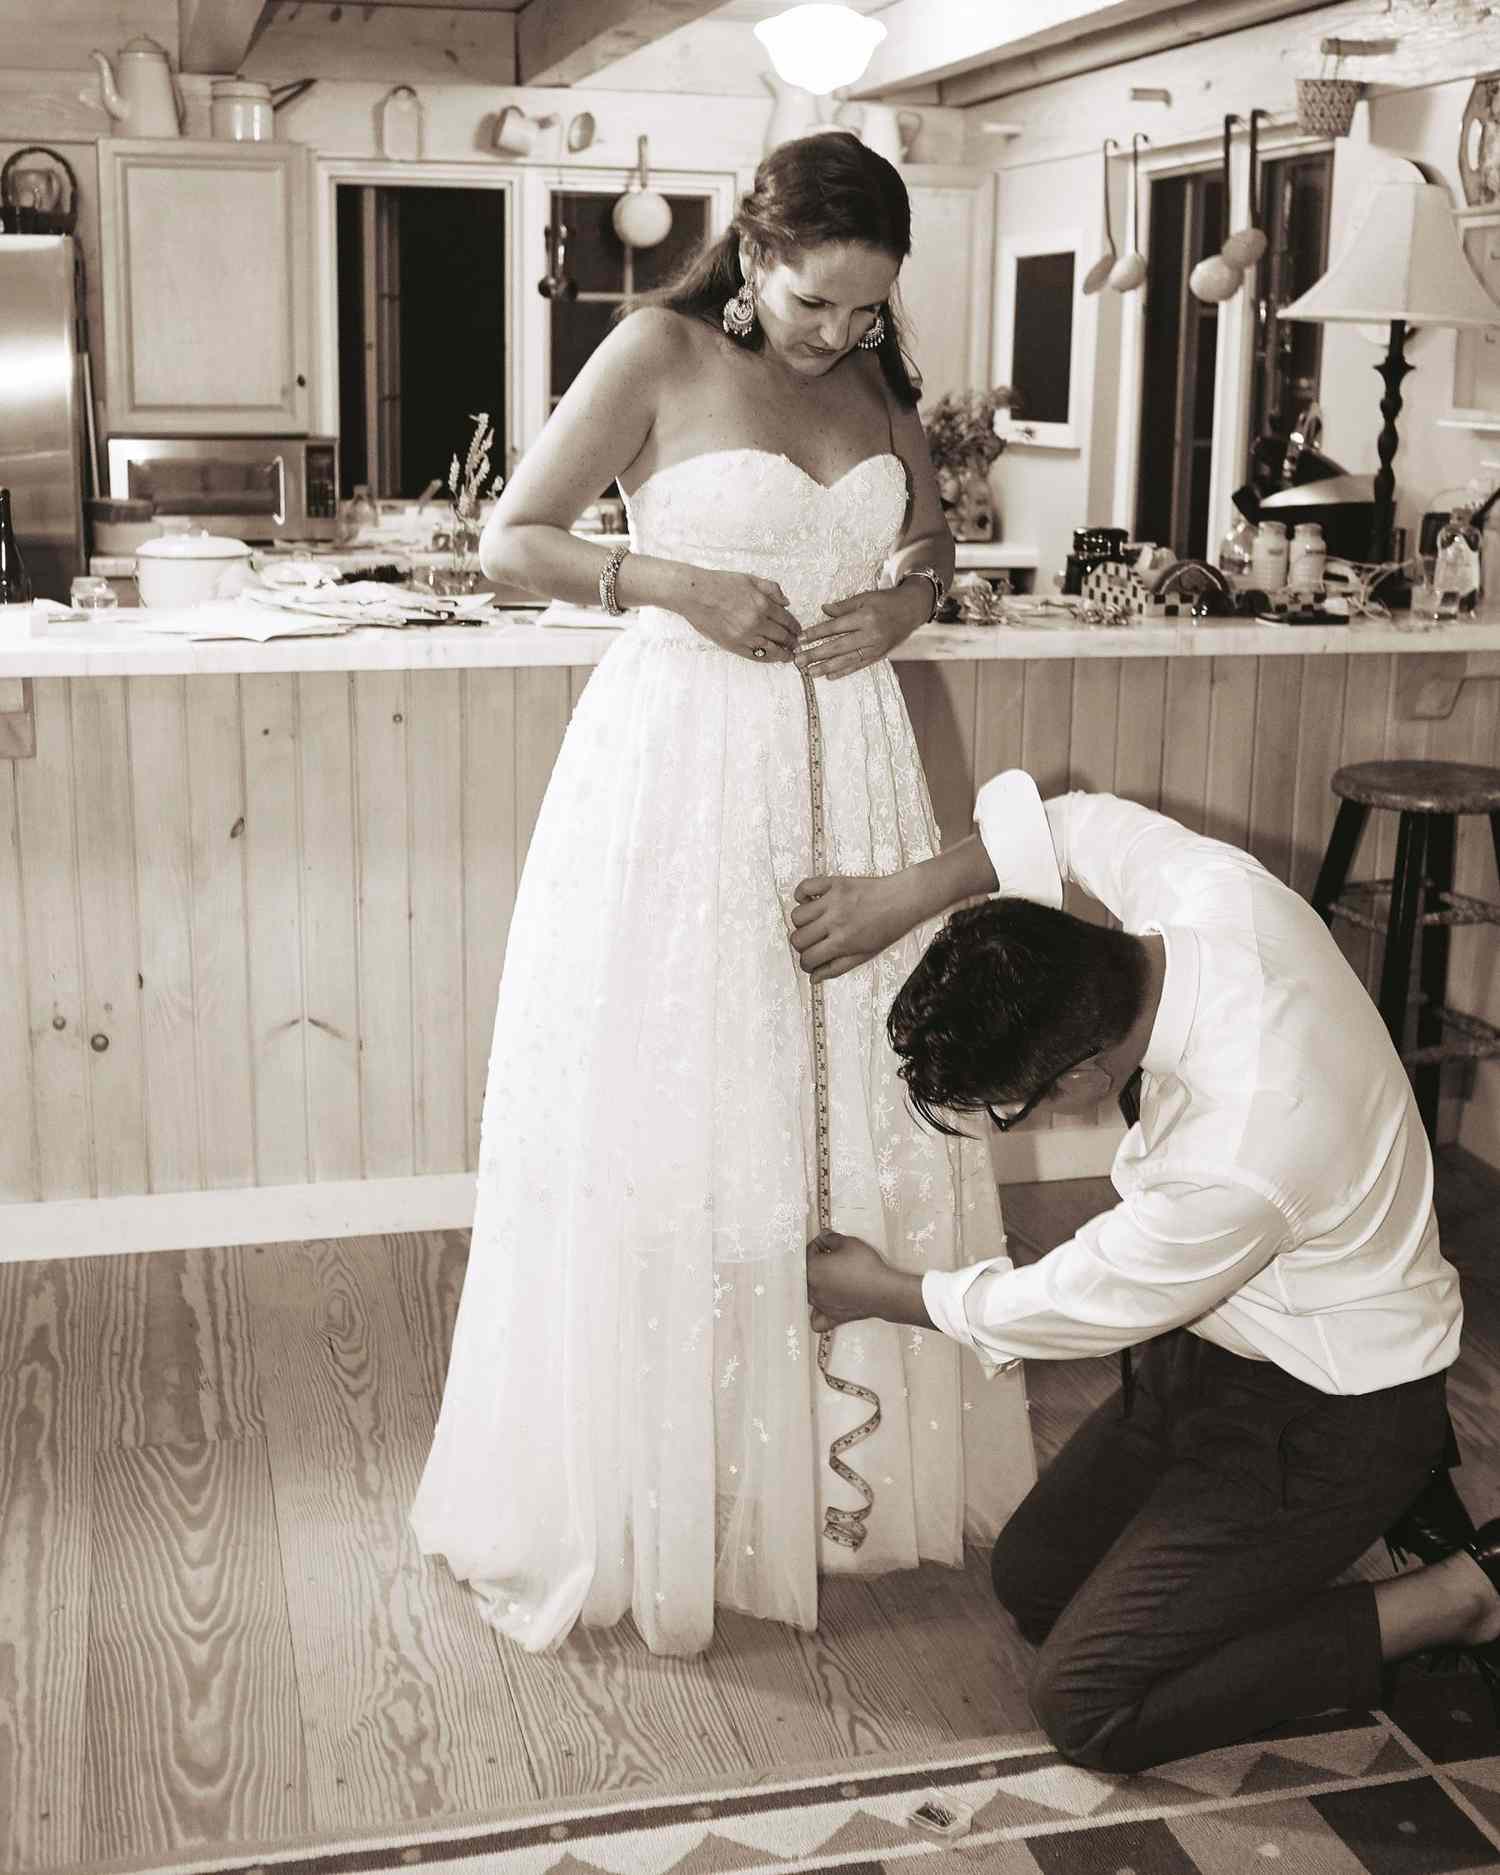 mfiona-peter-wedding-vermont-measuring-brides-dress-d3s.556.2015.47-d112512.jpg